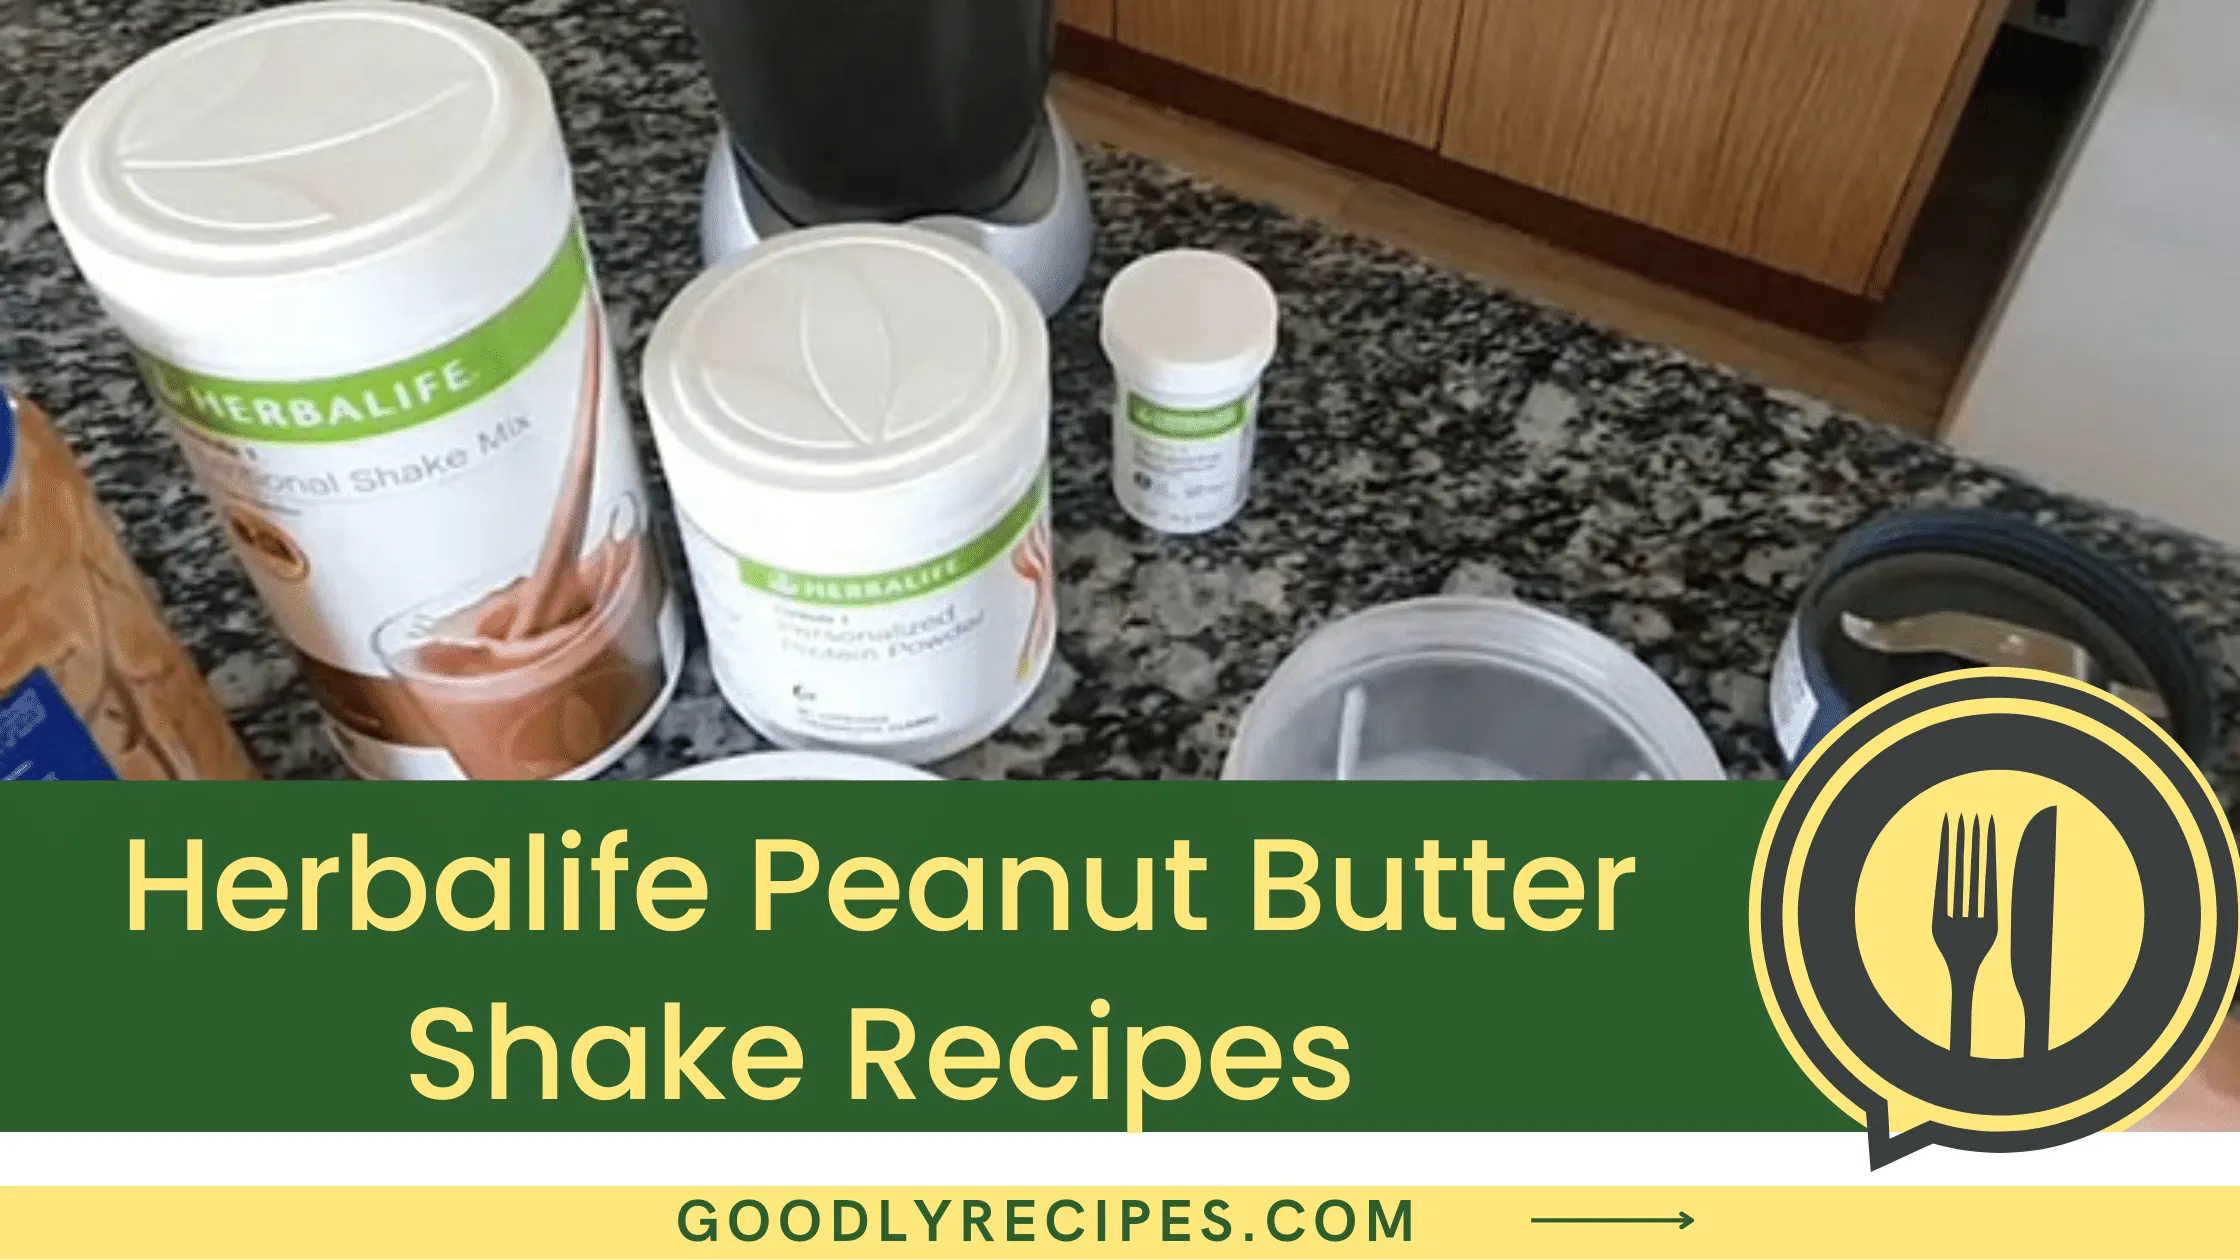 Herbalife Peanut Butter Shake Recipes